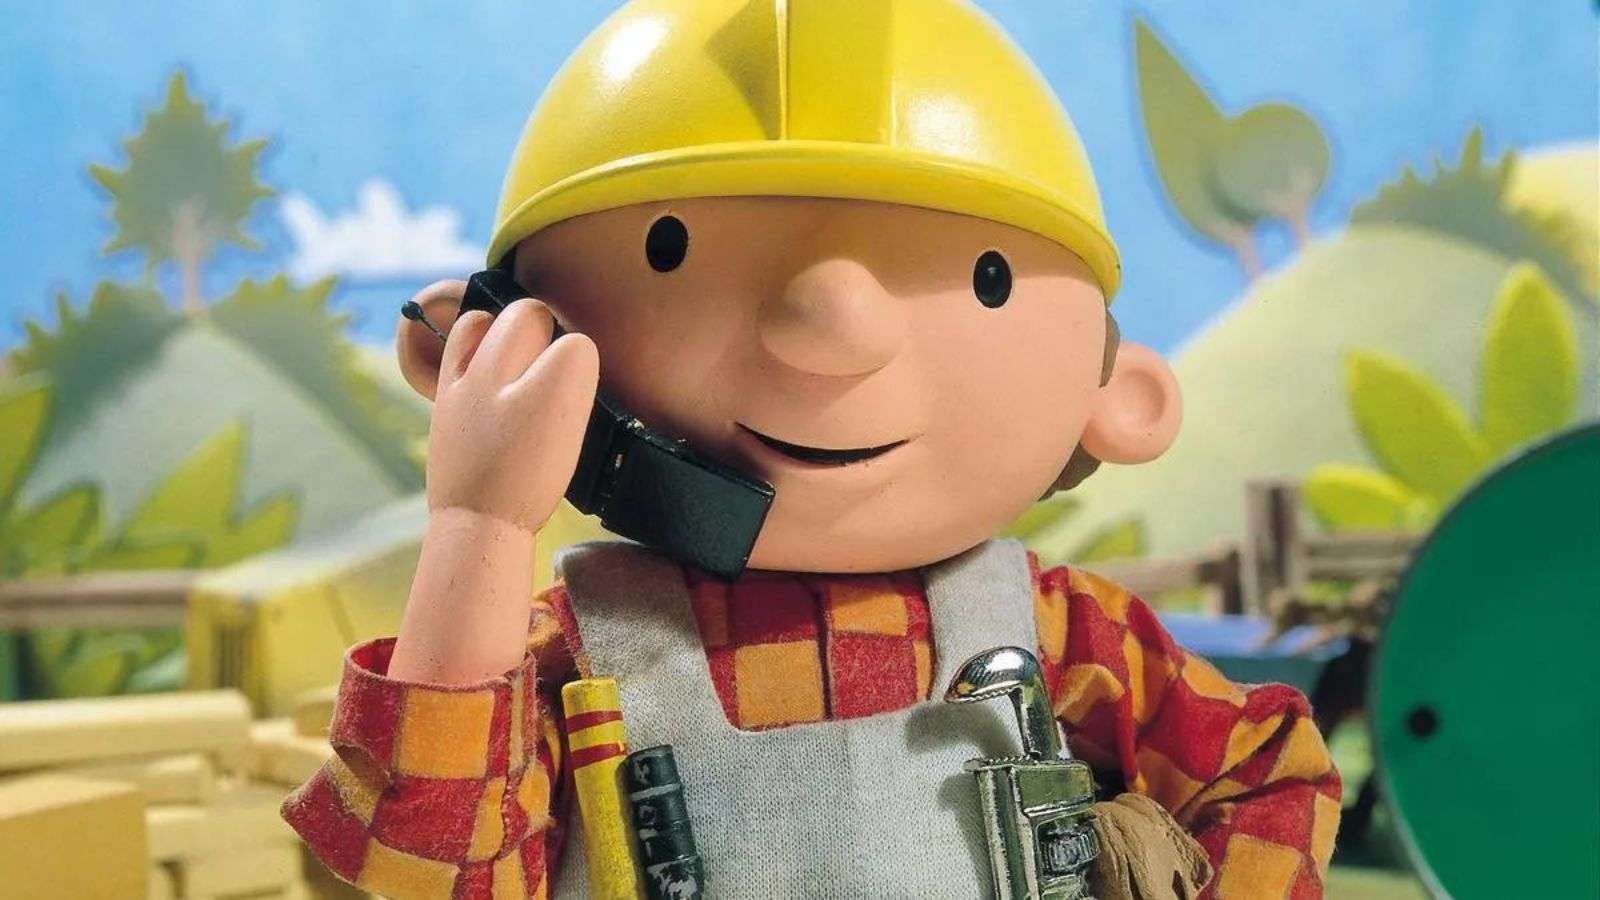 Bob the Builder head